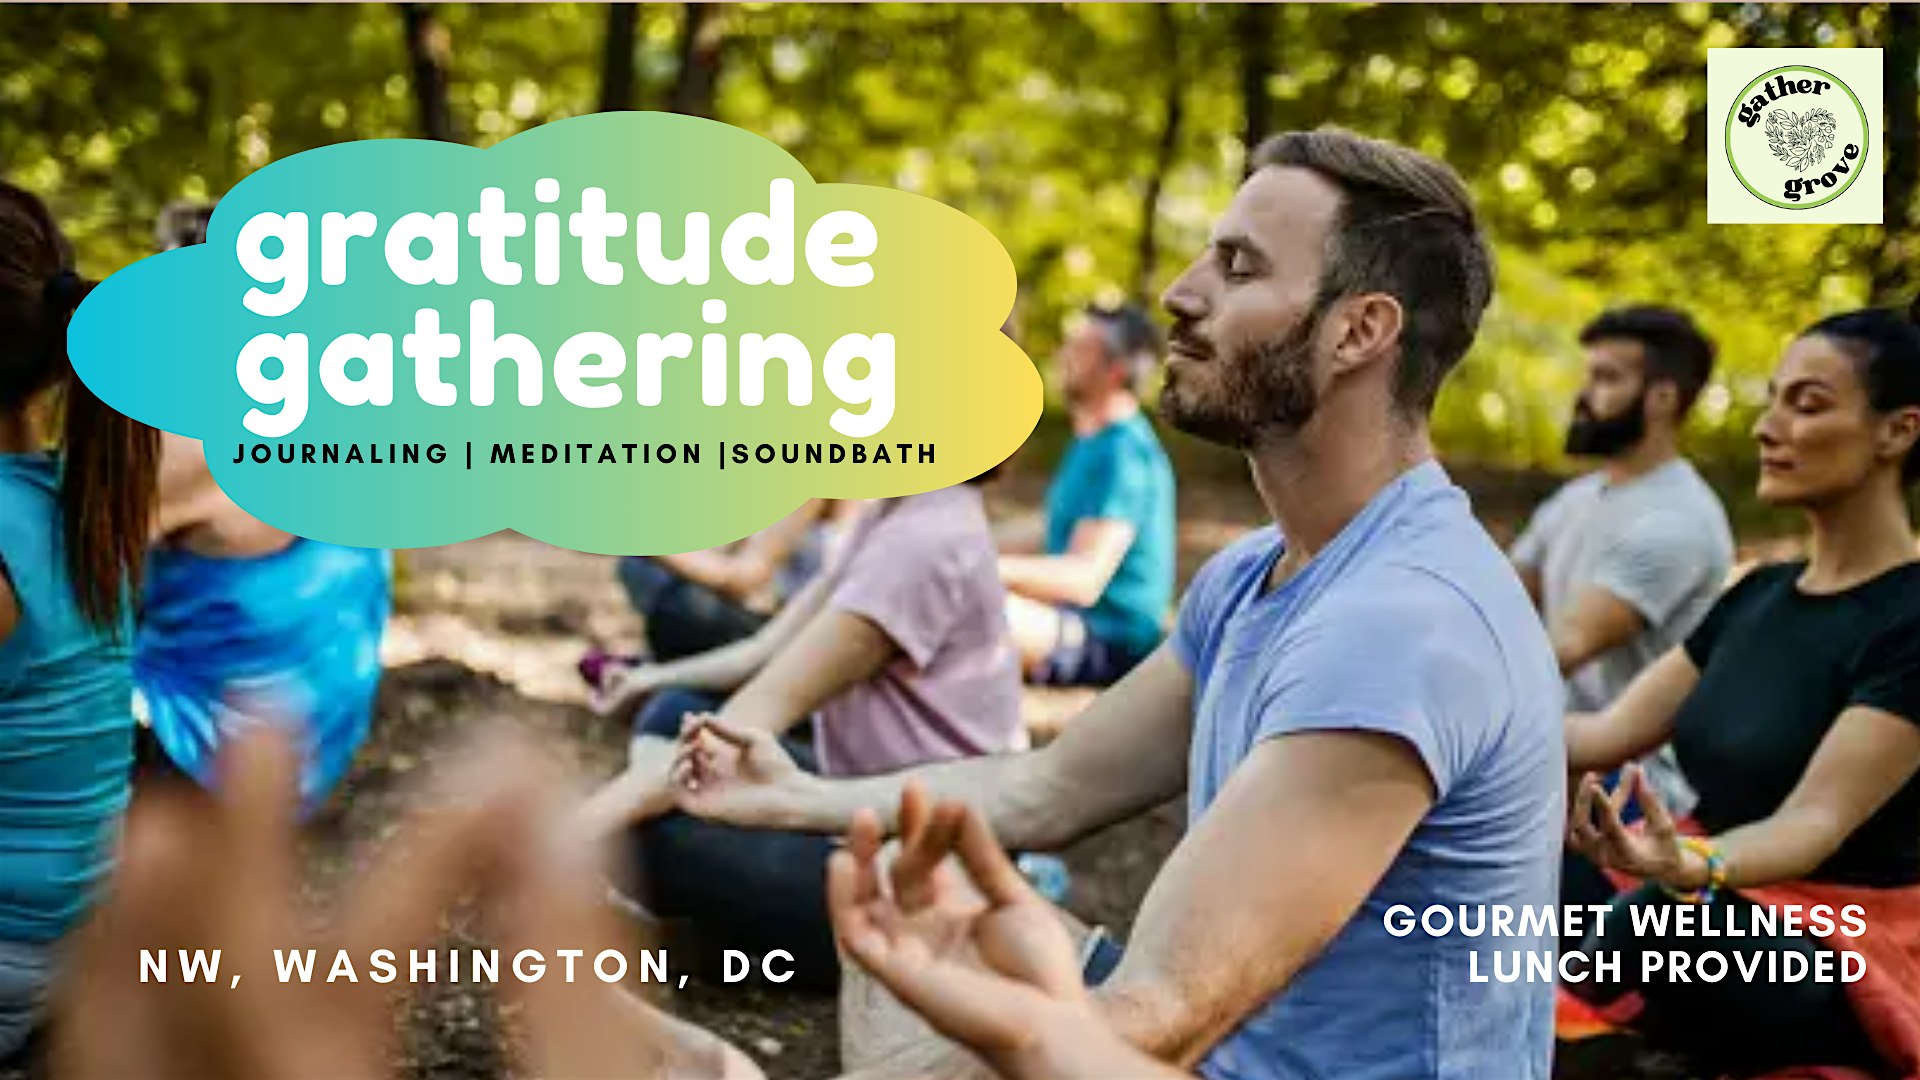 Gratitude Gathering - Soundbath, Journaling & Meditation Picnic